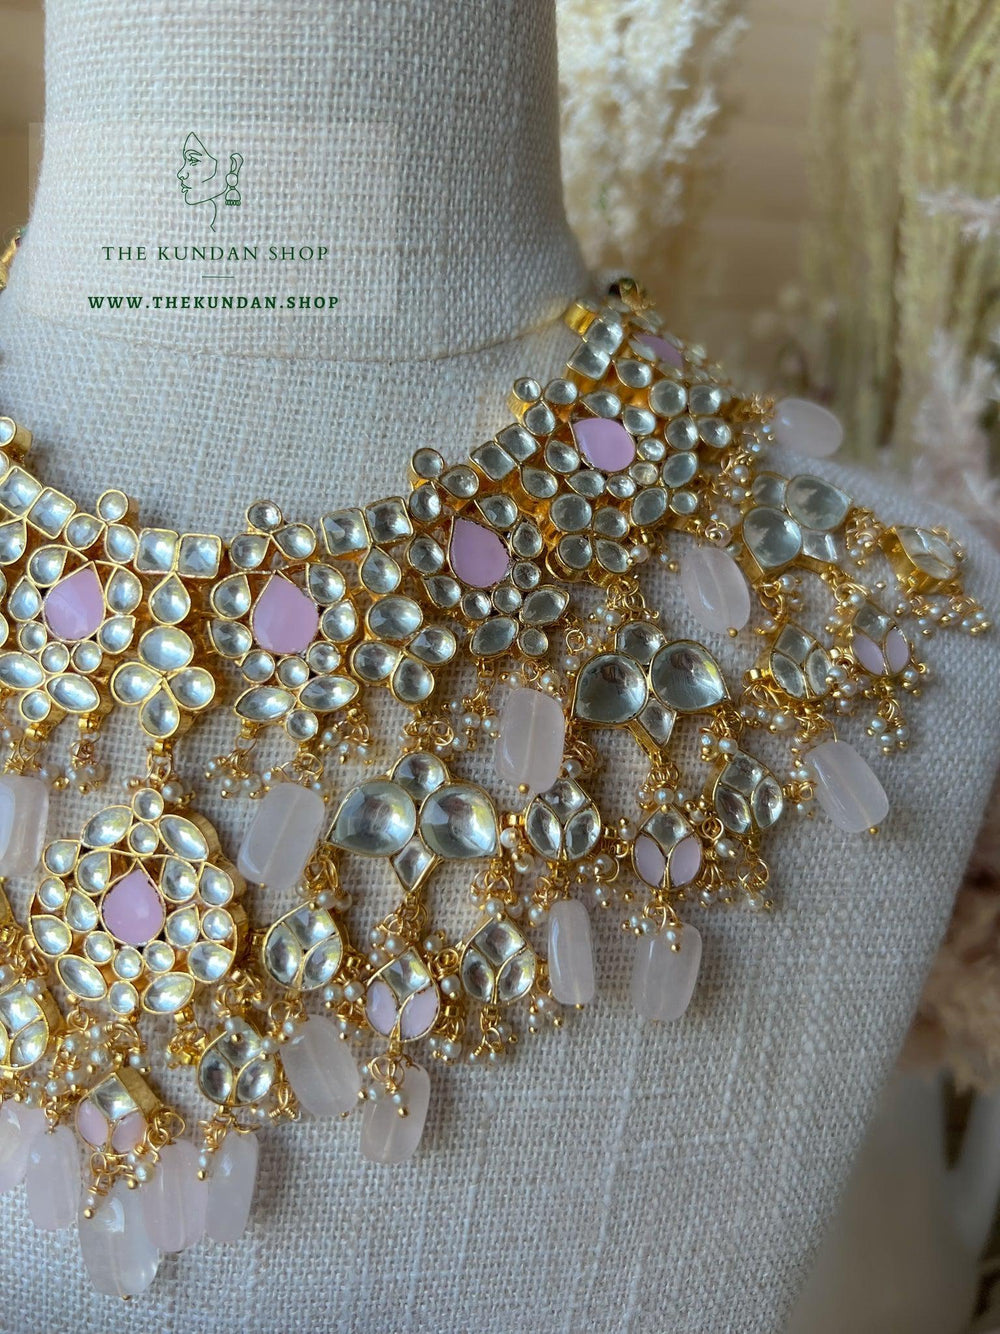 Unconditional Pink in Kundan Necklace Sets THE KUNDAN SHOP 